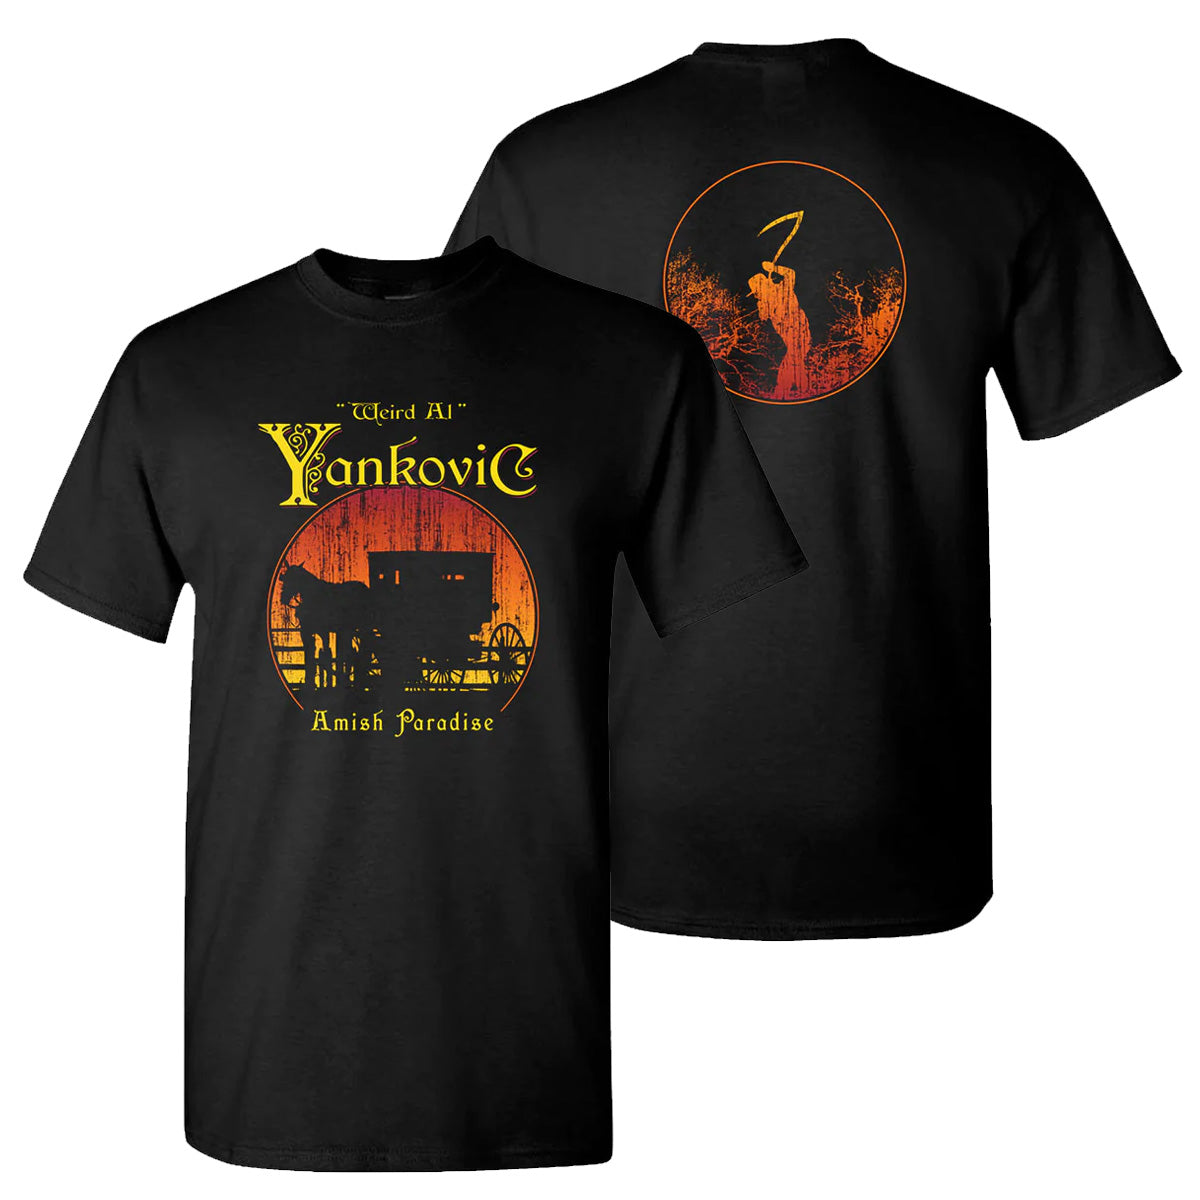 Amish Paradise T-Shirt